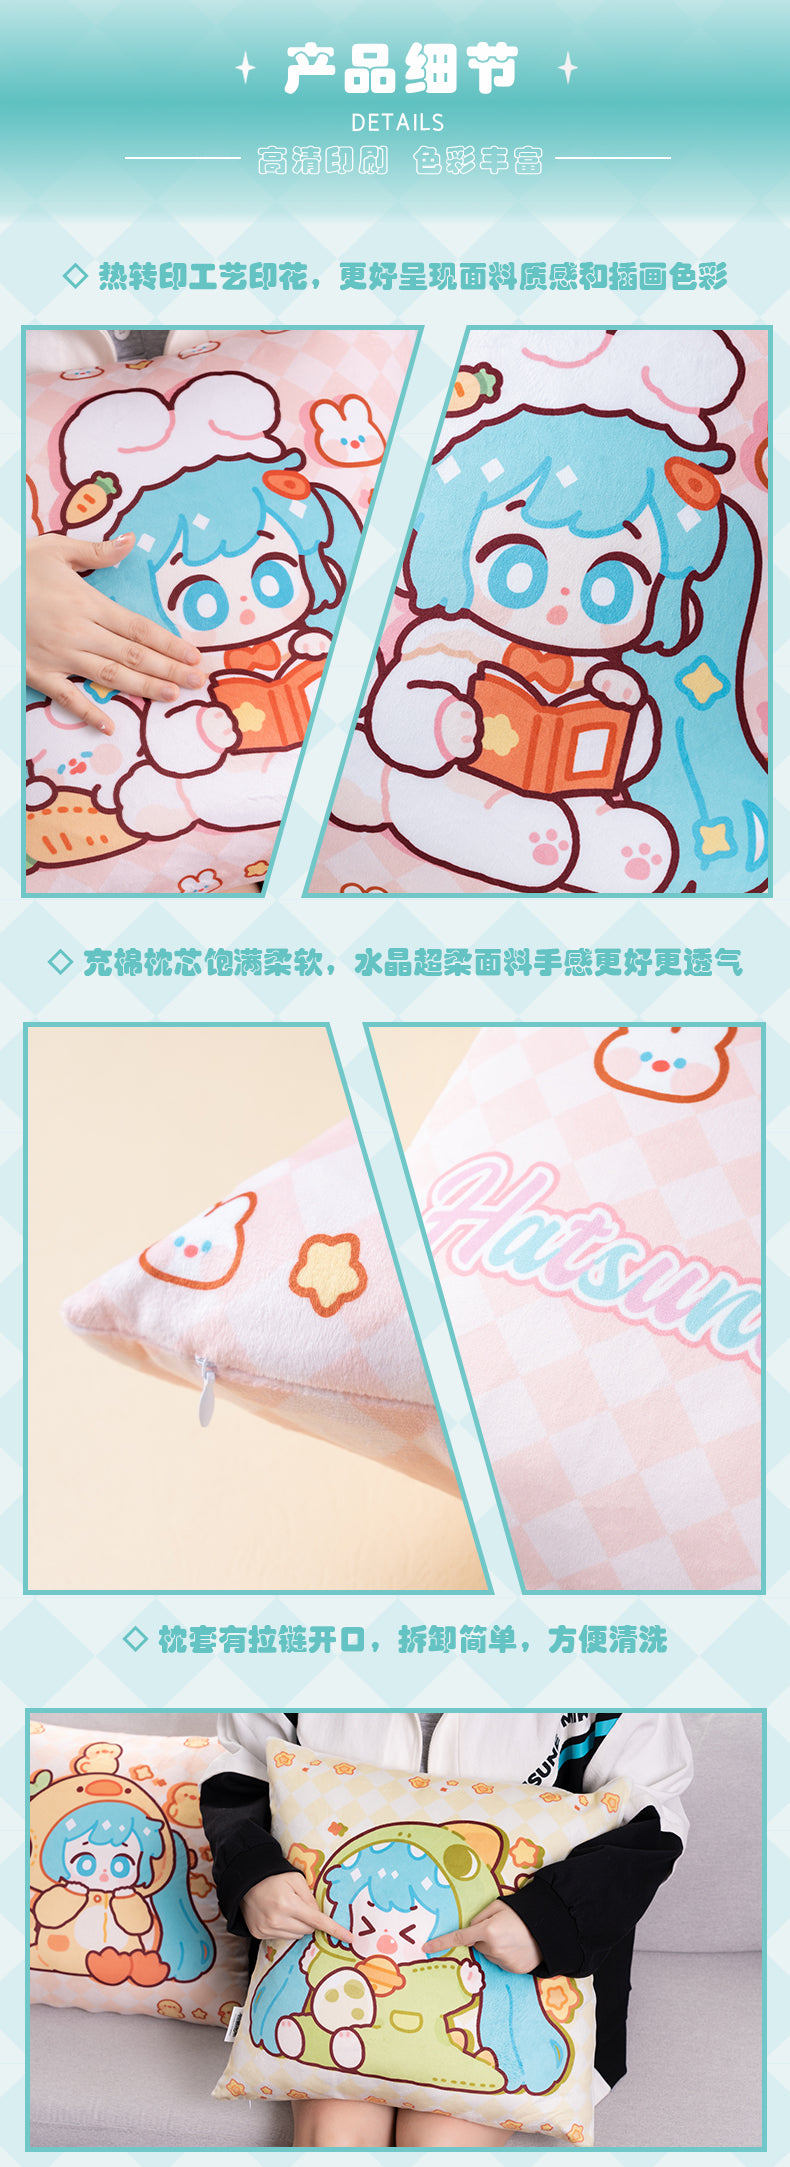 (Pre-Order) Hatsune Miku - Moeyu x Hatsune Miku - Onesies Party Small Pillow